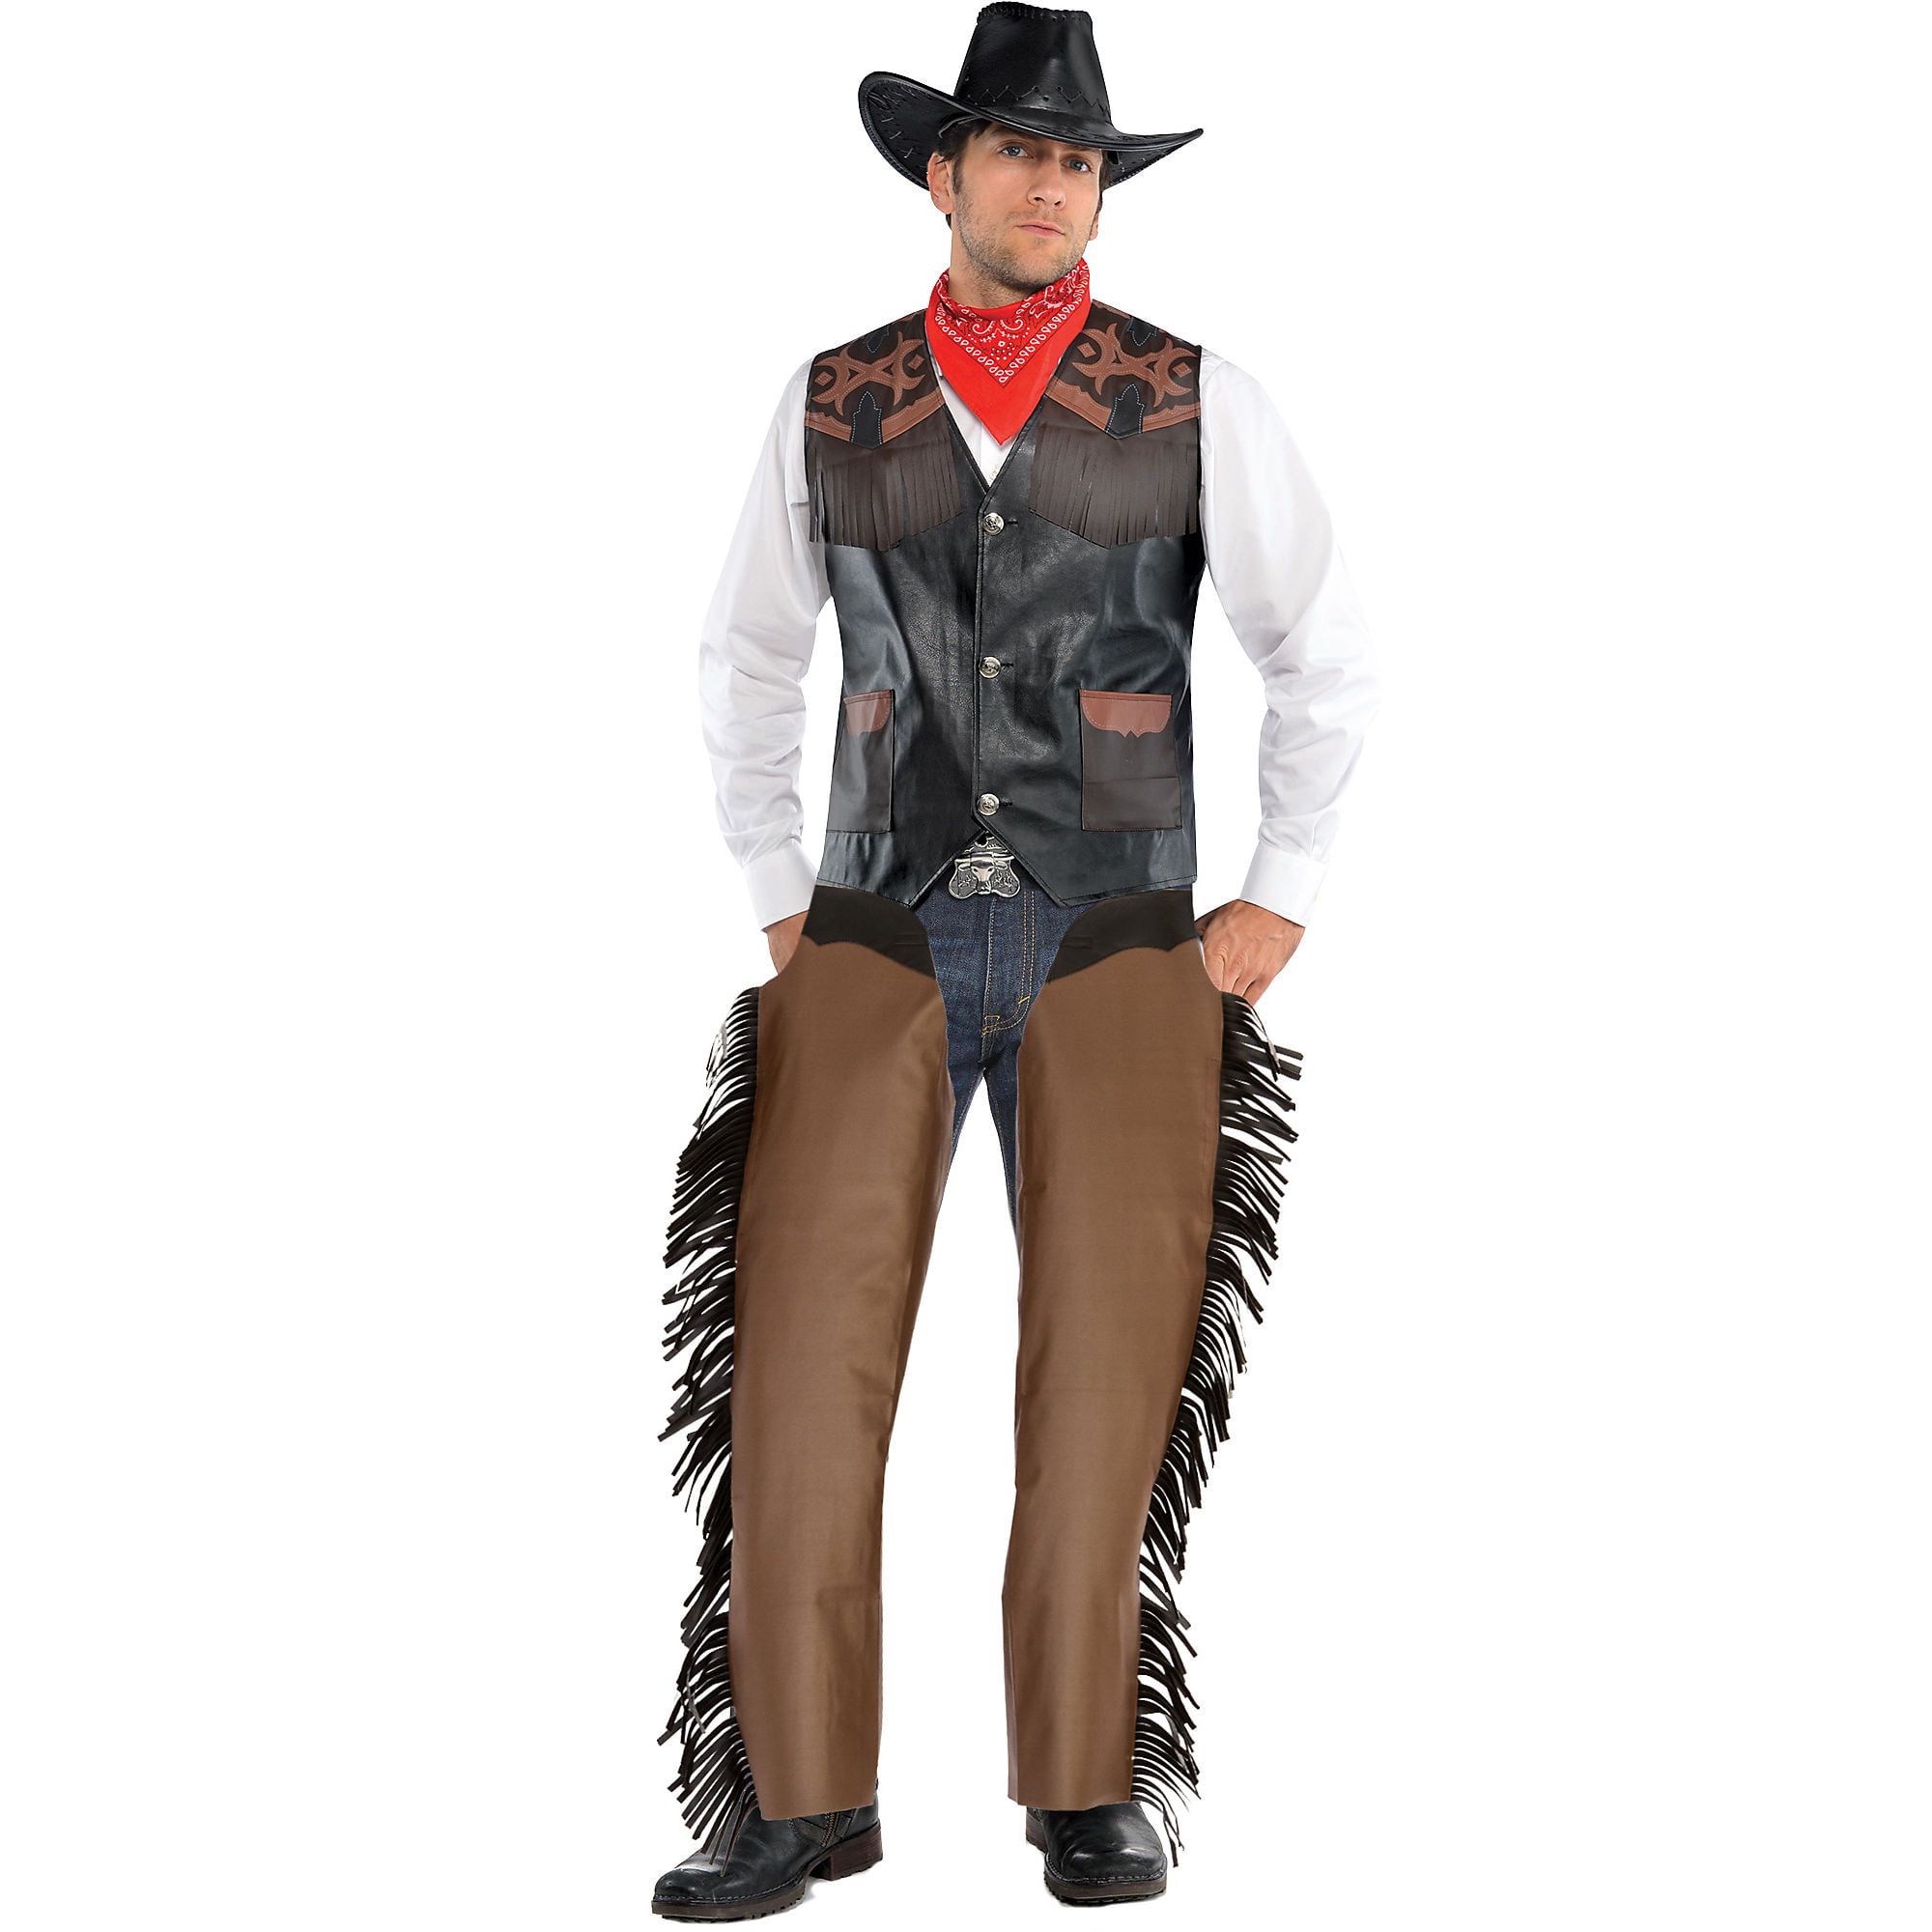 AMSCAN Cowboy Chaps Halloween Costume Accessories for Men, Standard - Walma...